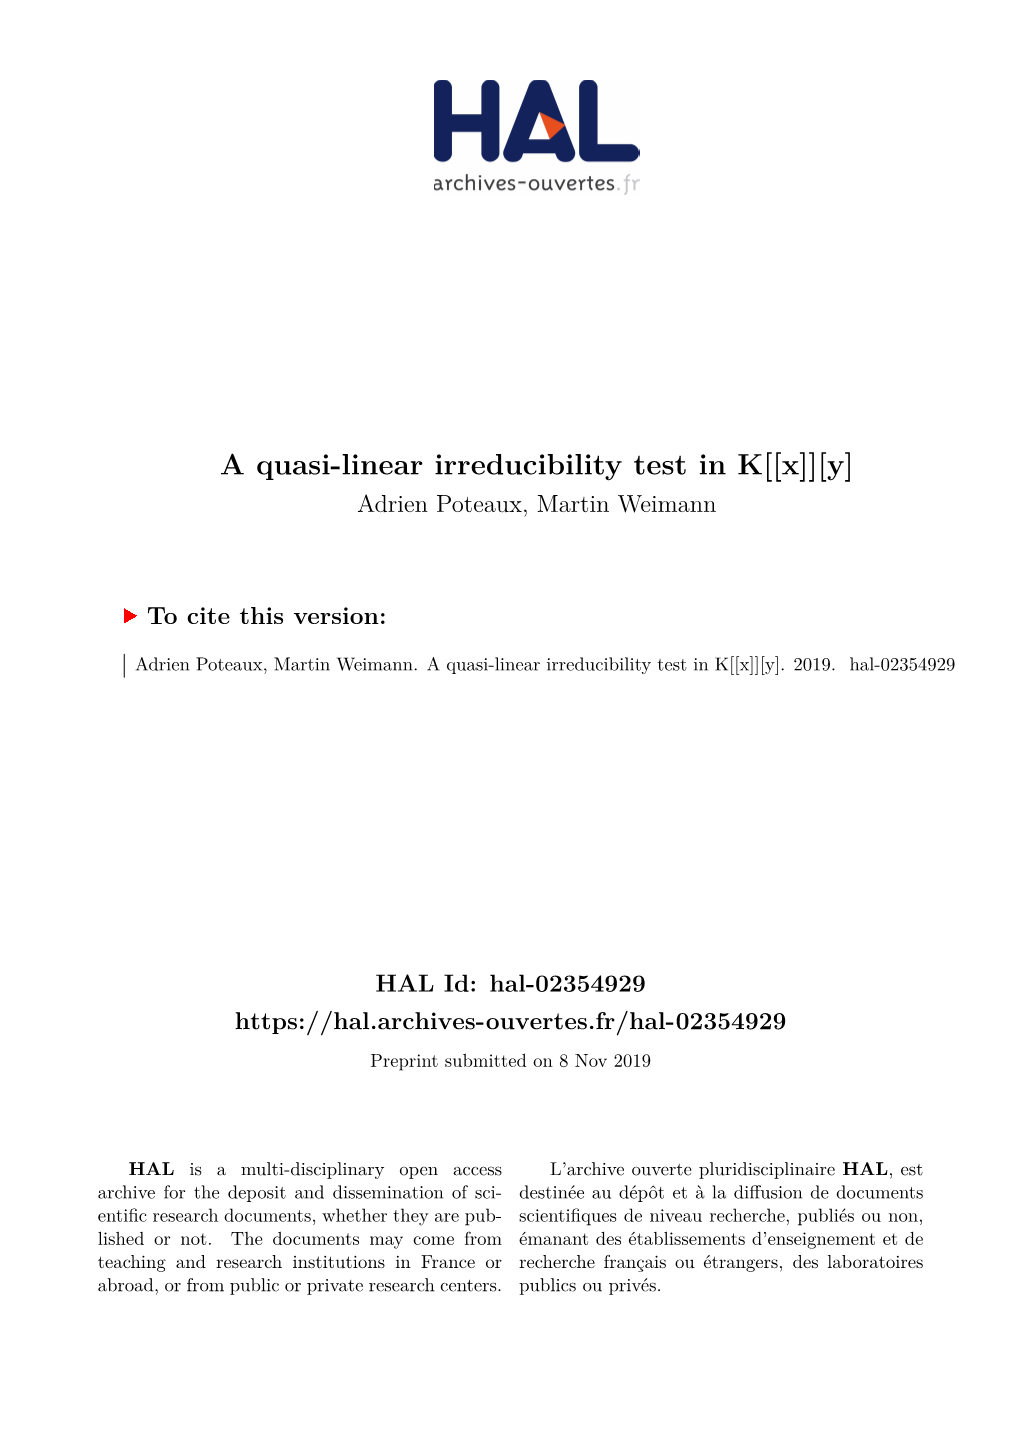 A Quasi-Linear Irreducibility Test in K[[X]][Y] Adrien Poteaux, Martin Weimann